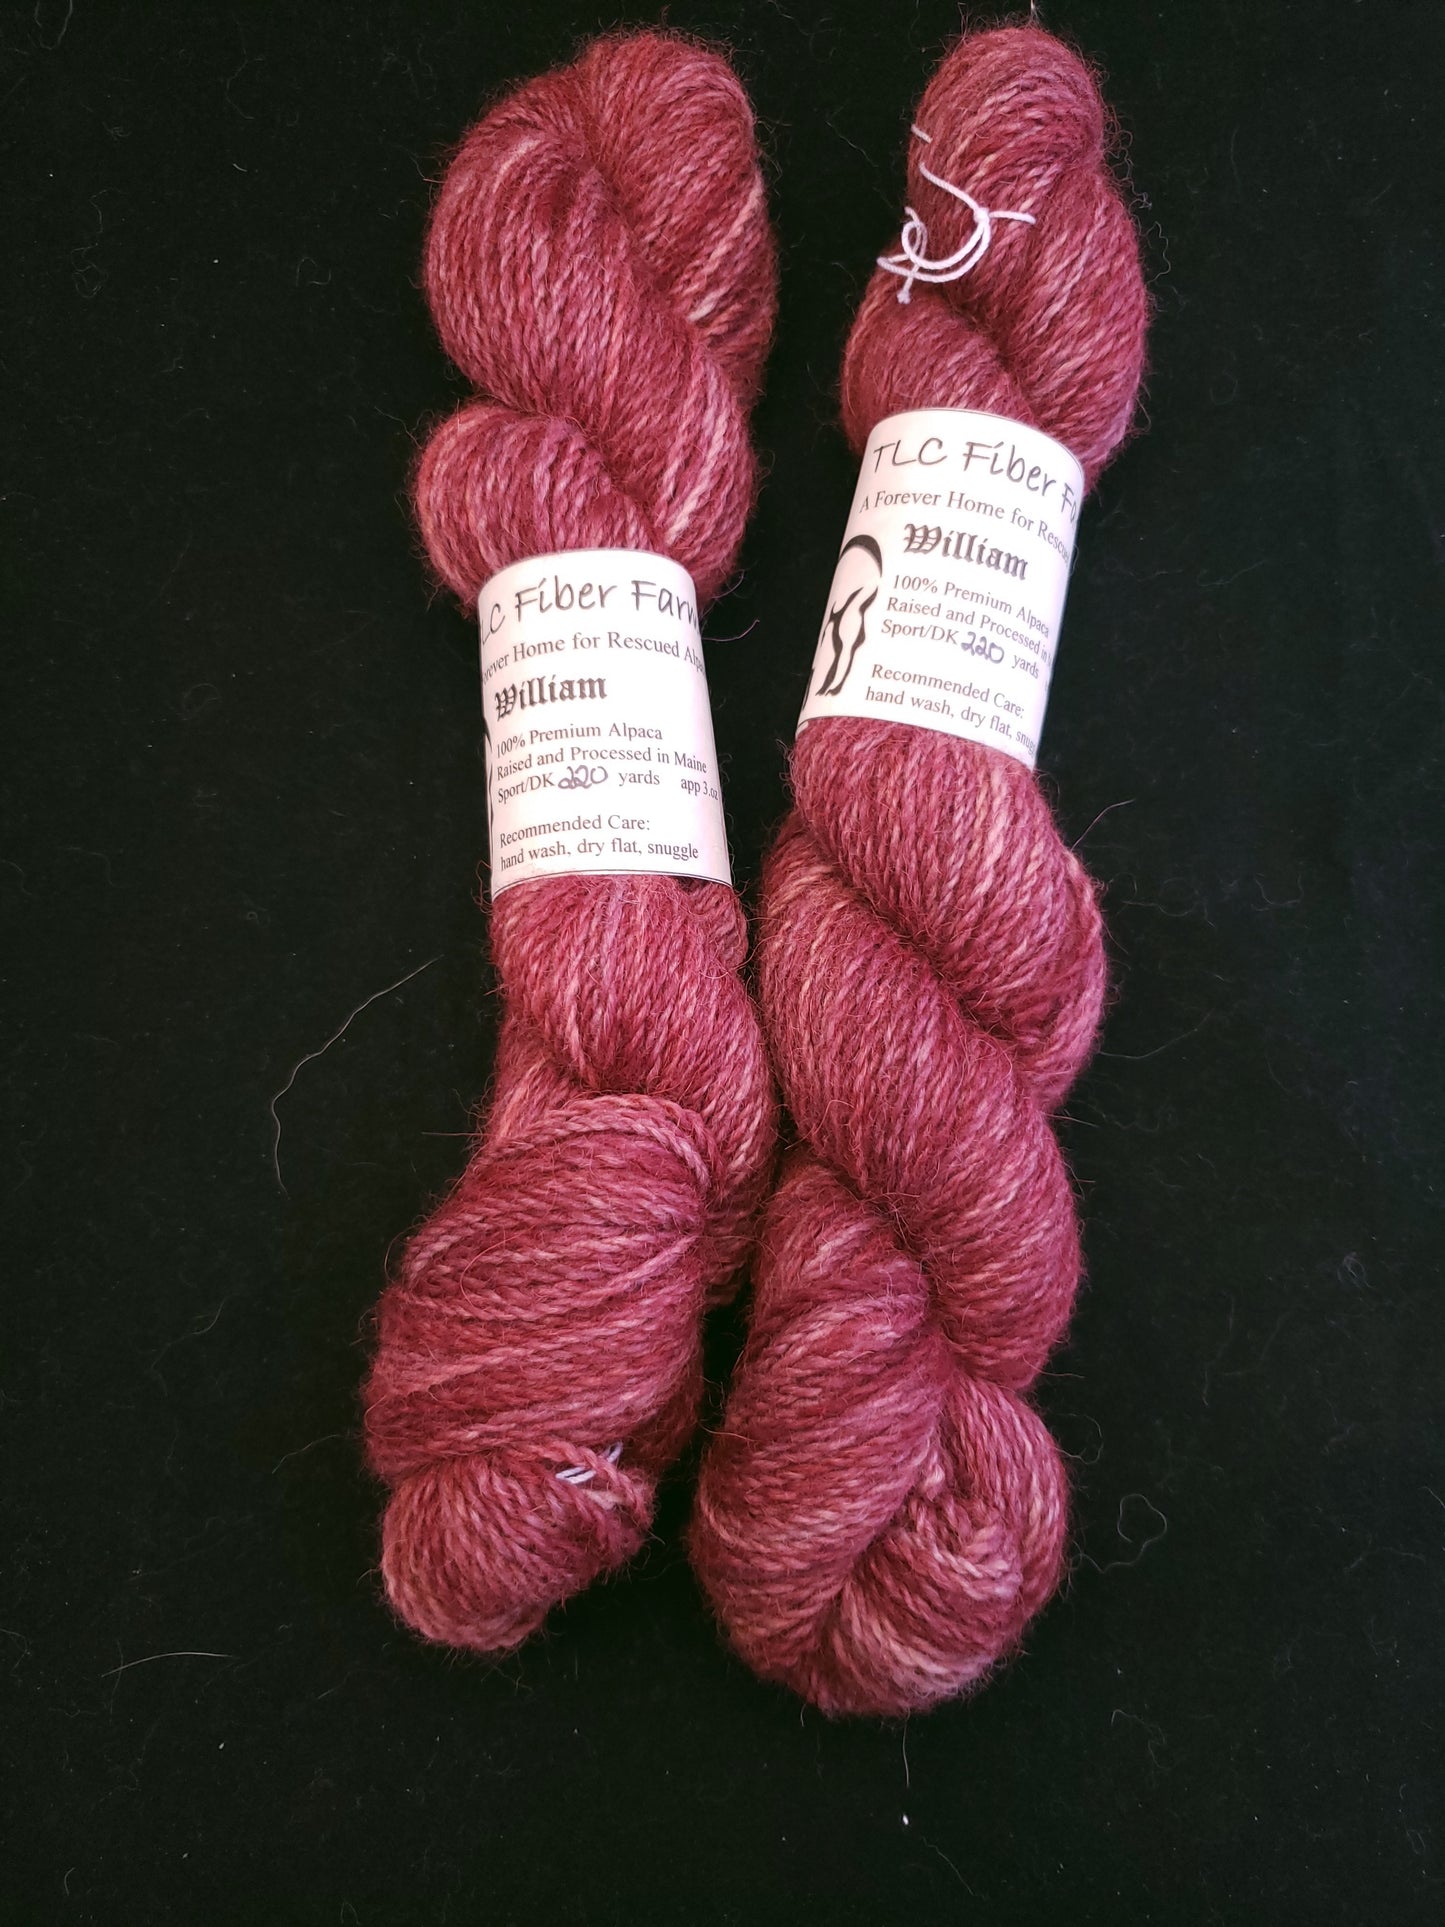 William - Cranberry alpaca yarn